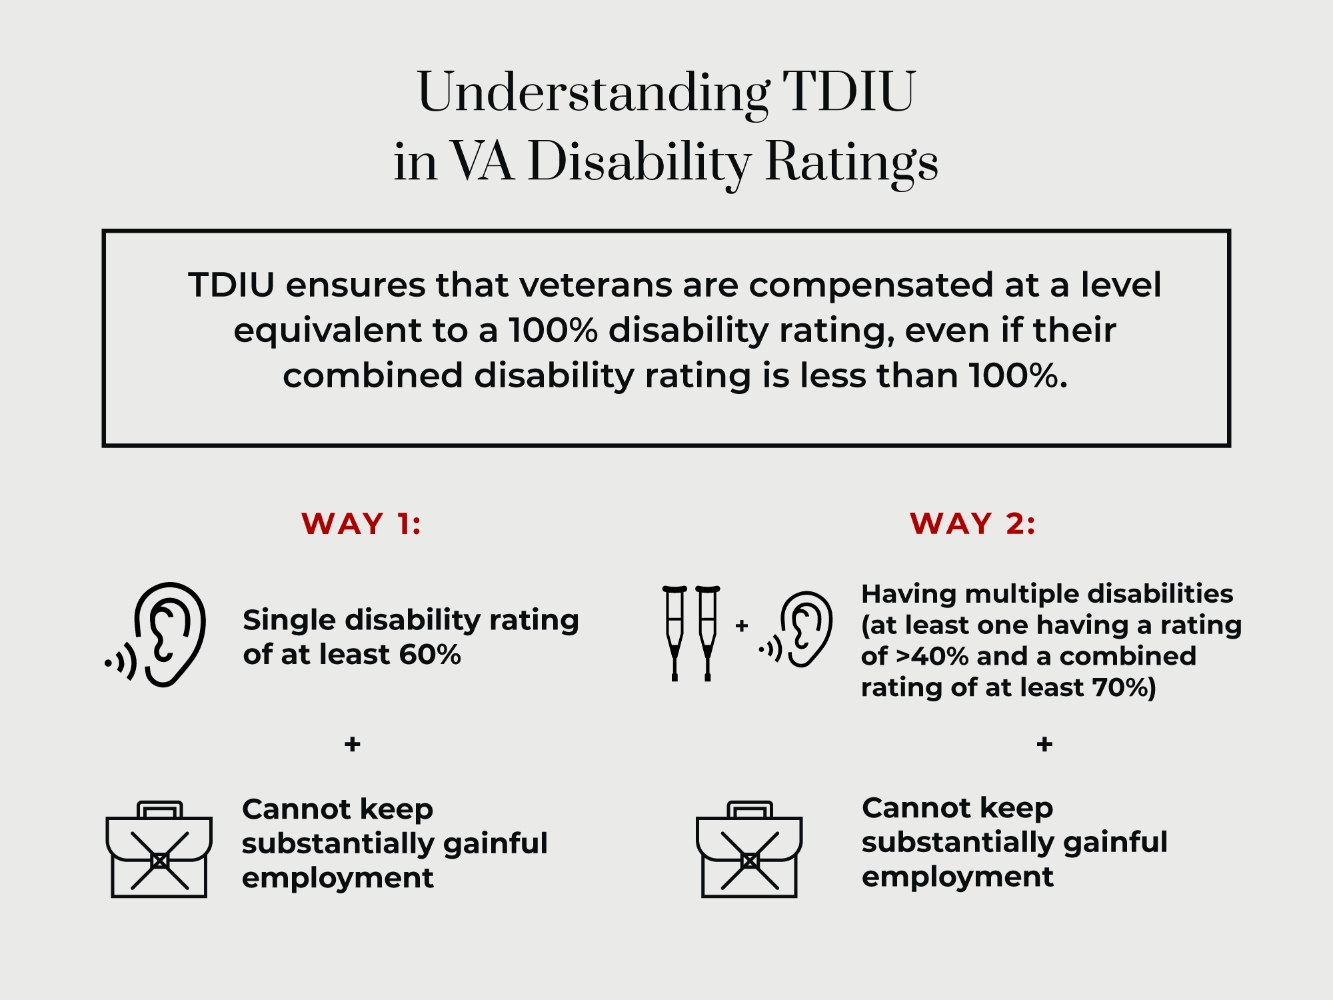 understanding TDIU in VA disability ratings